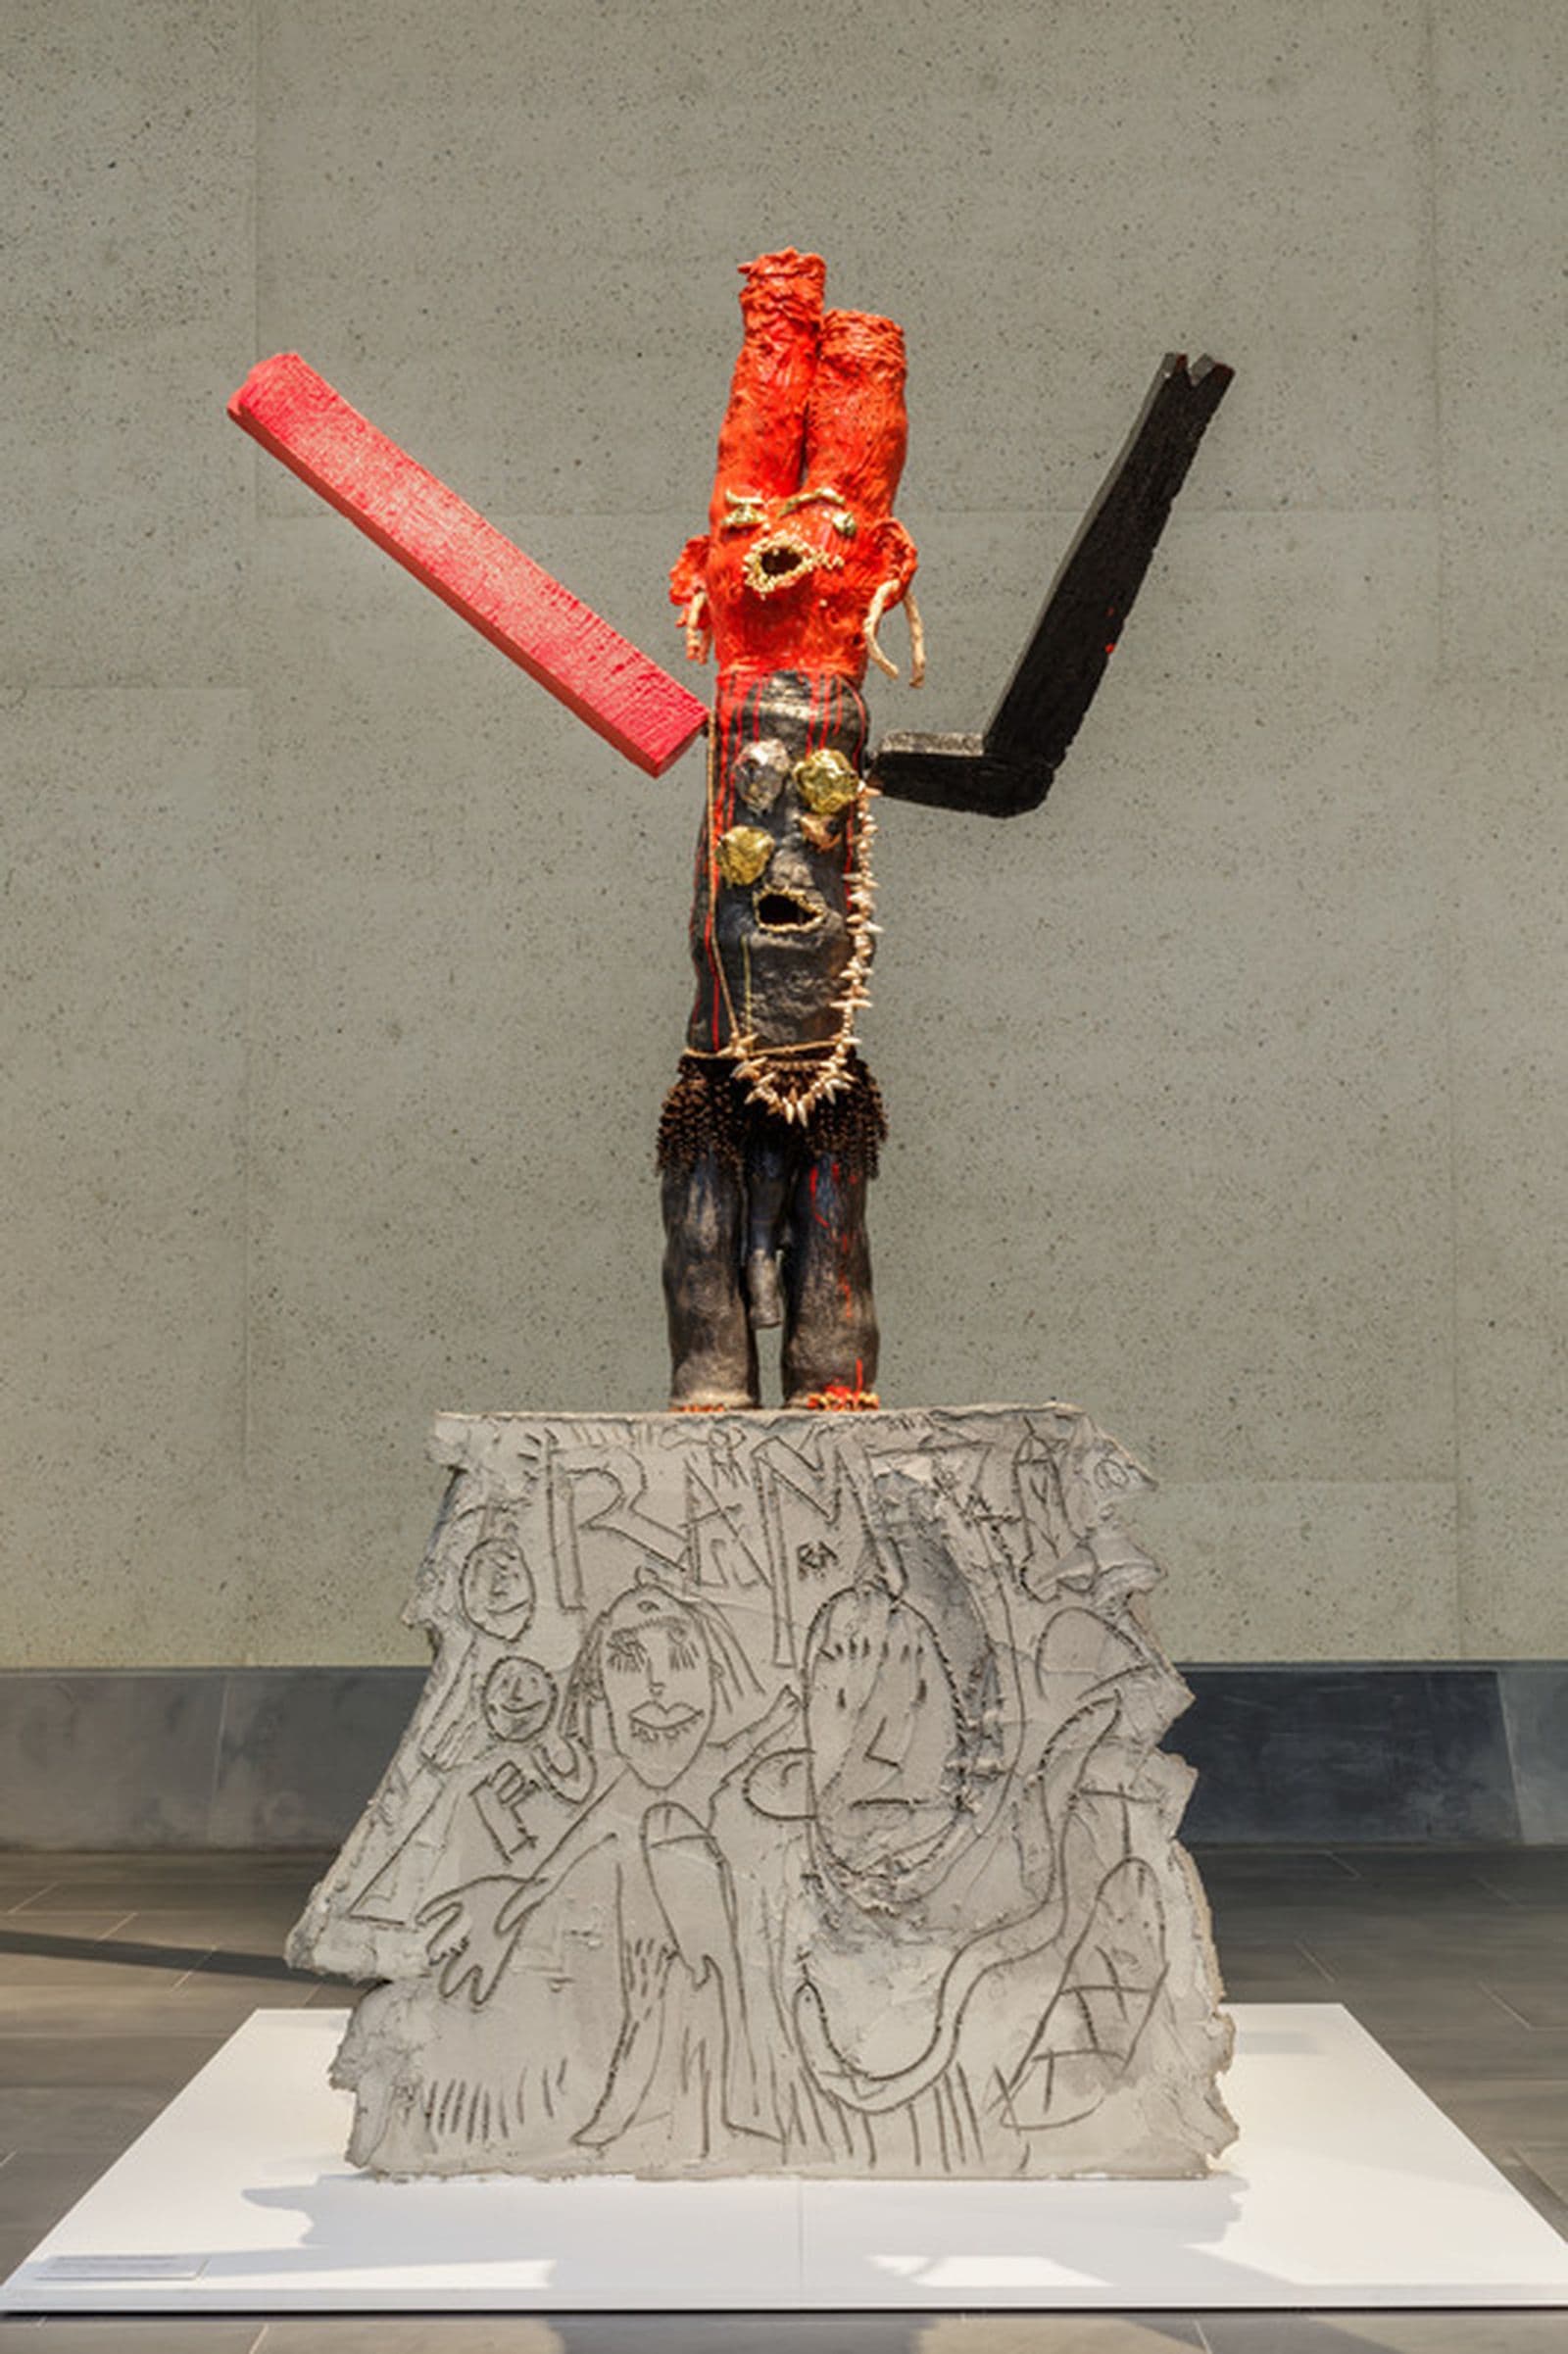 A ceramic sculpture of a vaguely humanoid figure atop a cement platform